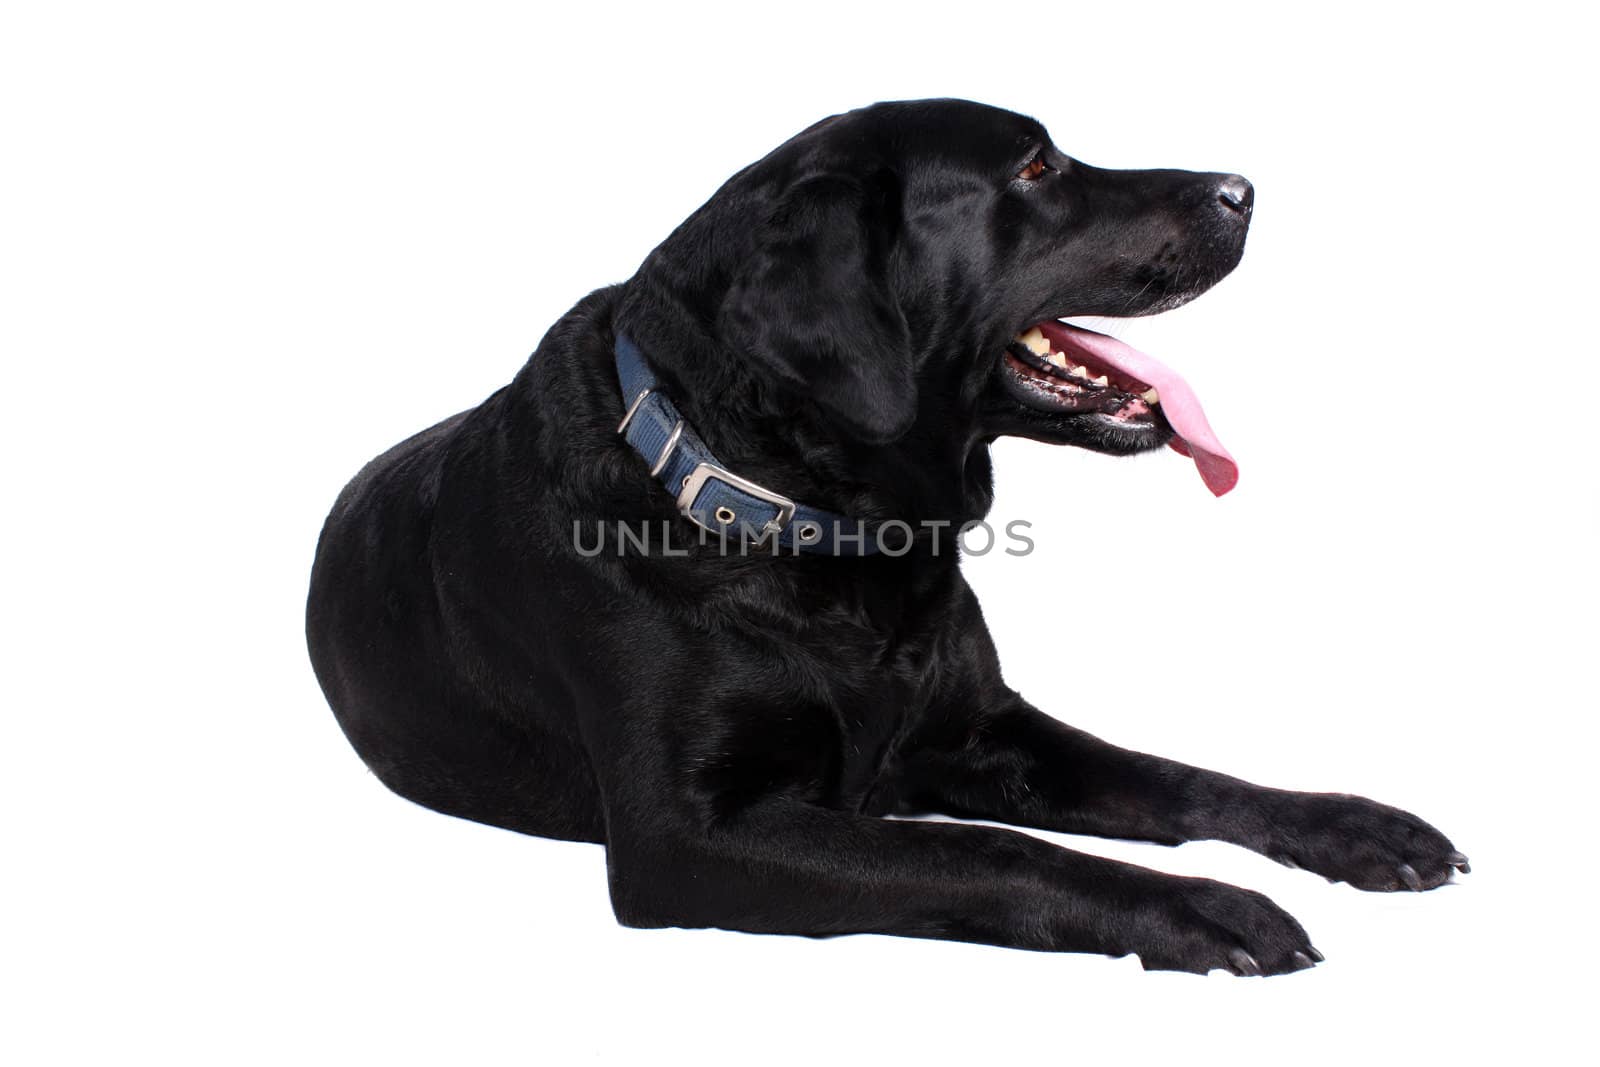 A black labrador dog sitting comfortably, on white studio background.